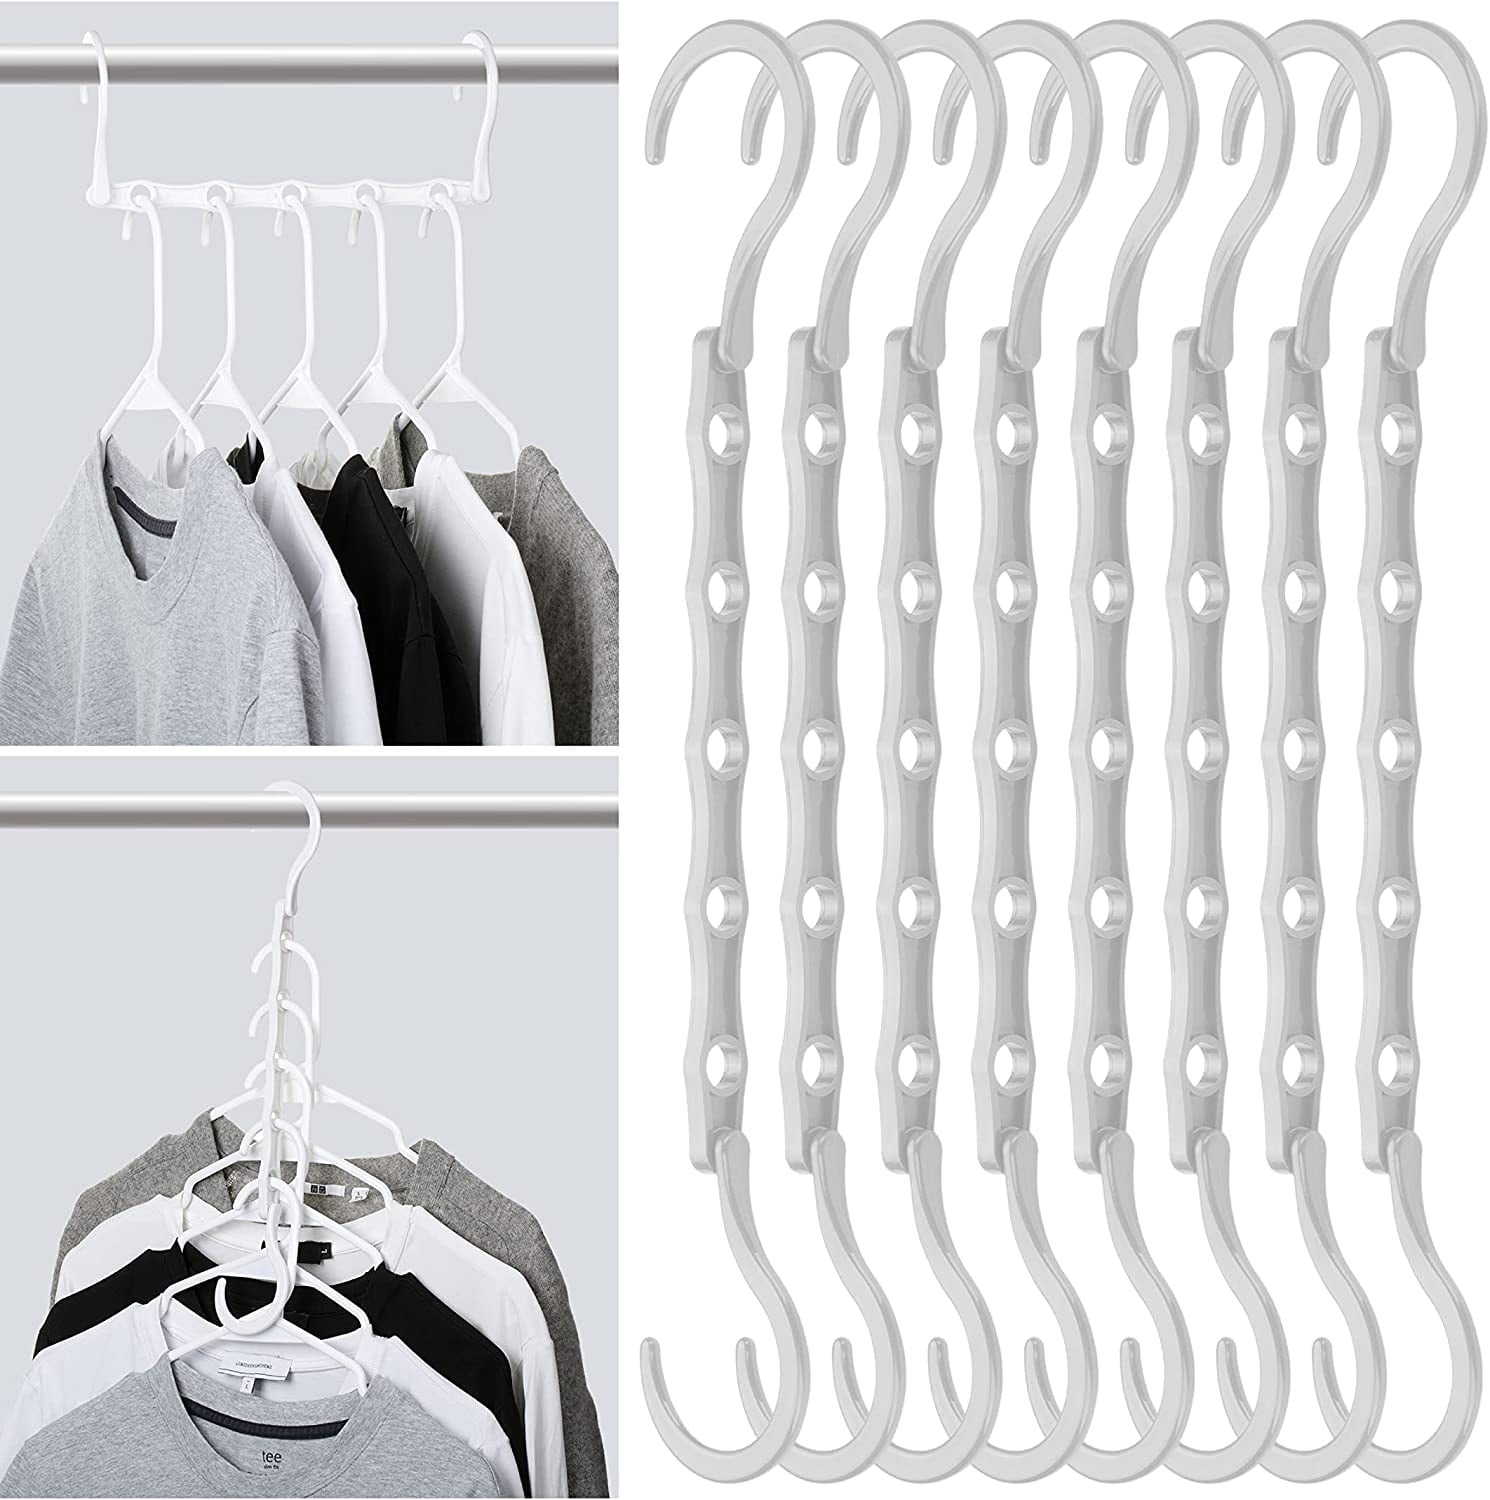 Mr. Pen- Space Saving Hangers, Black, 8 Pack, Closet Organizer